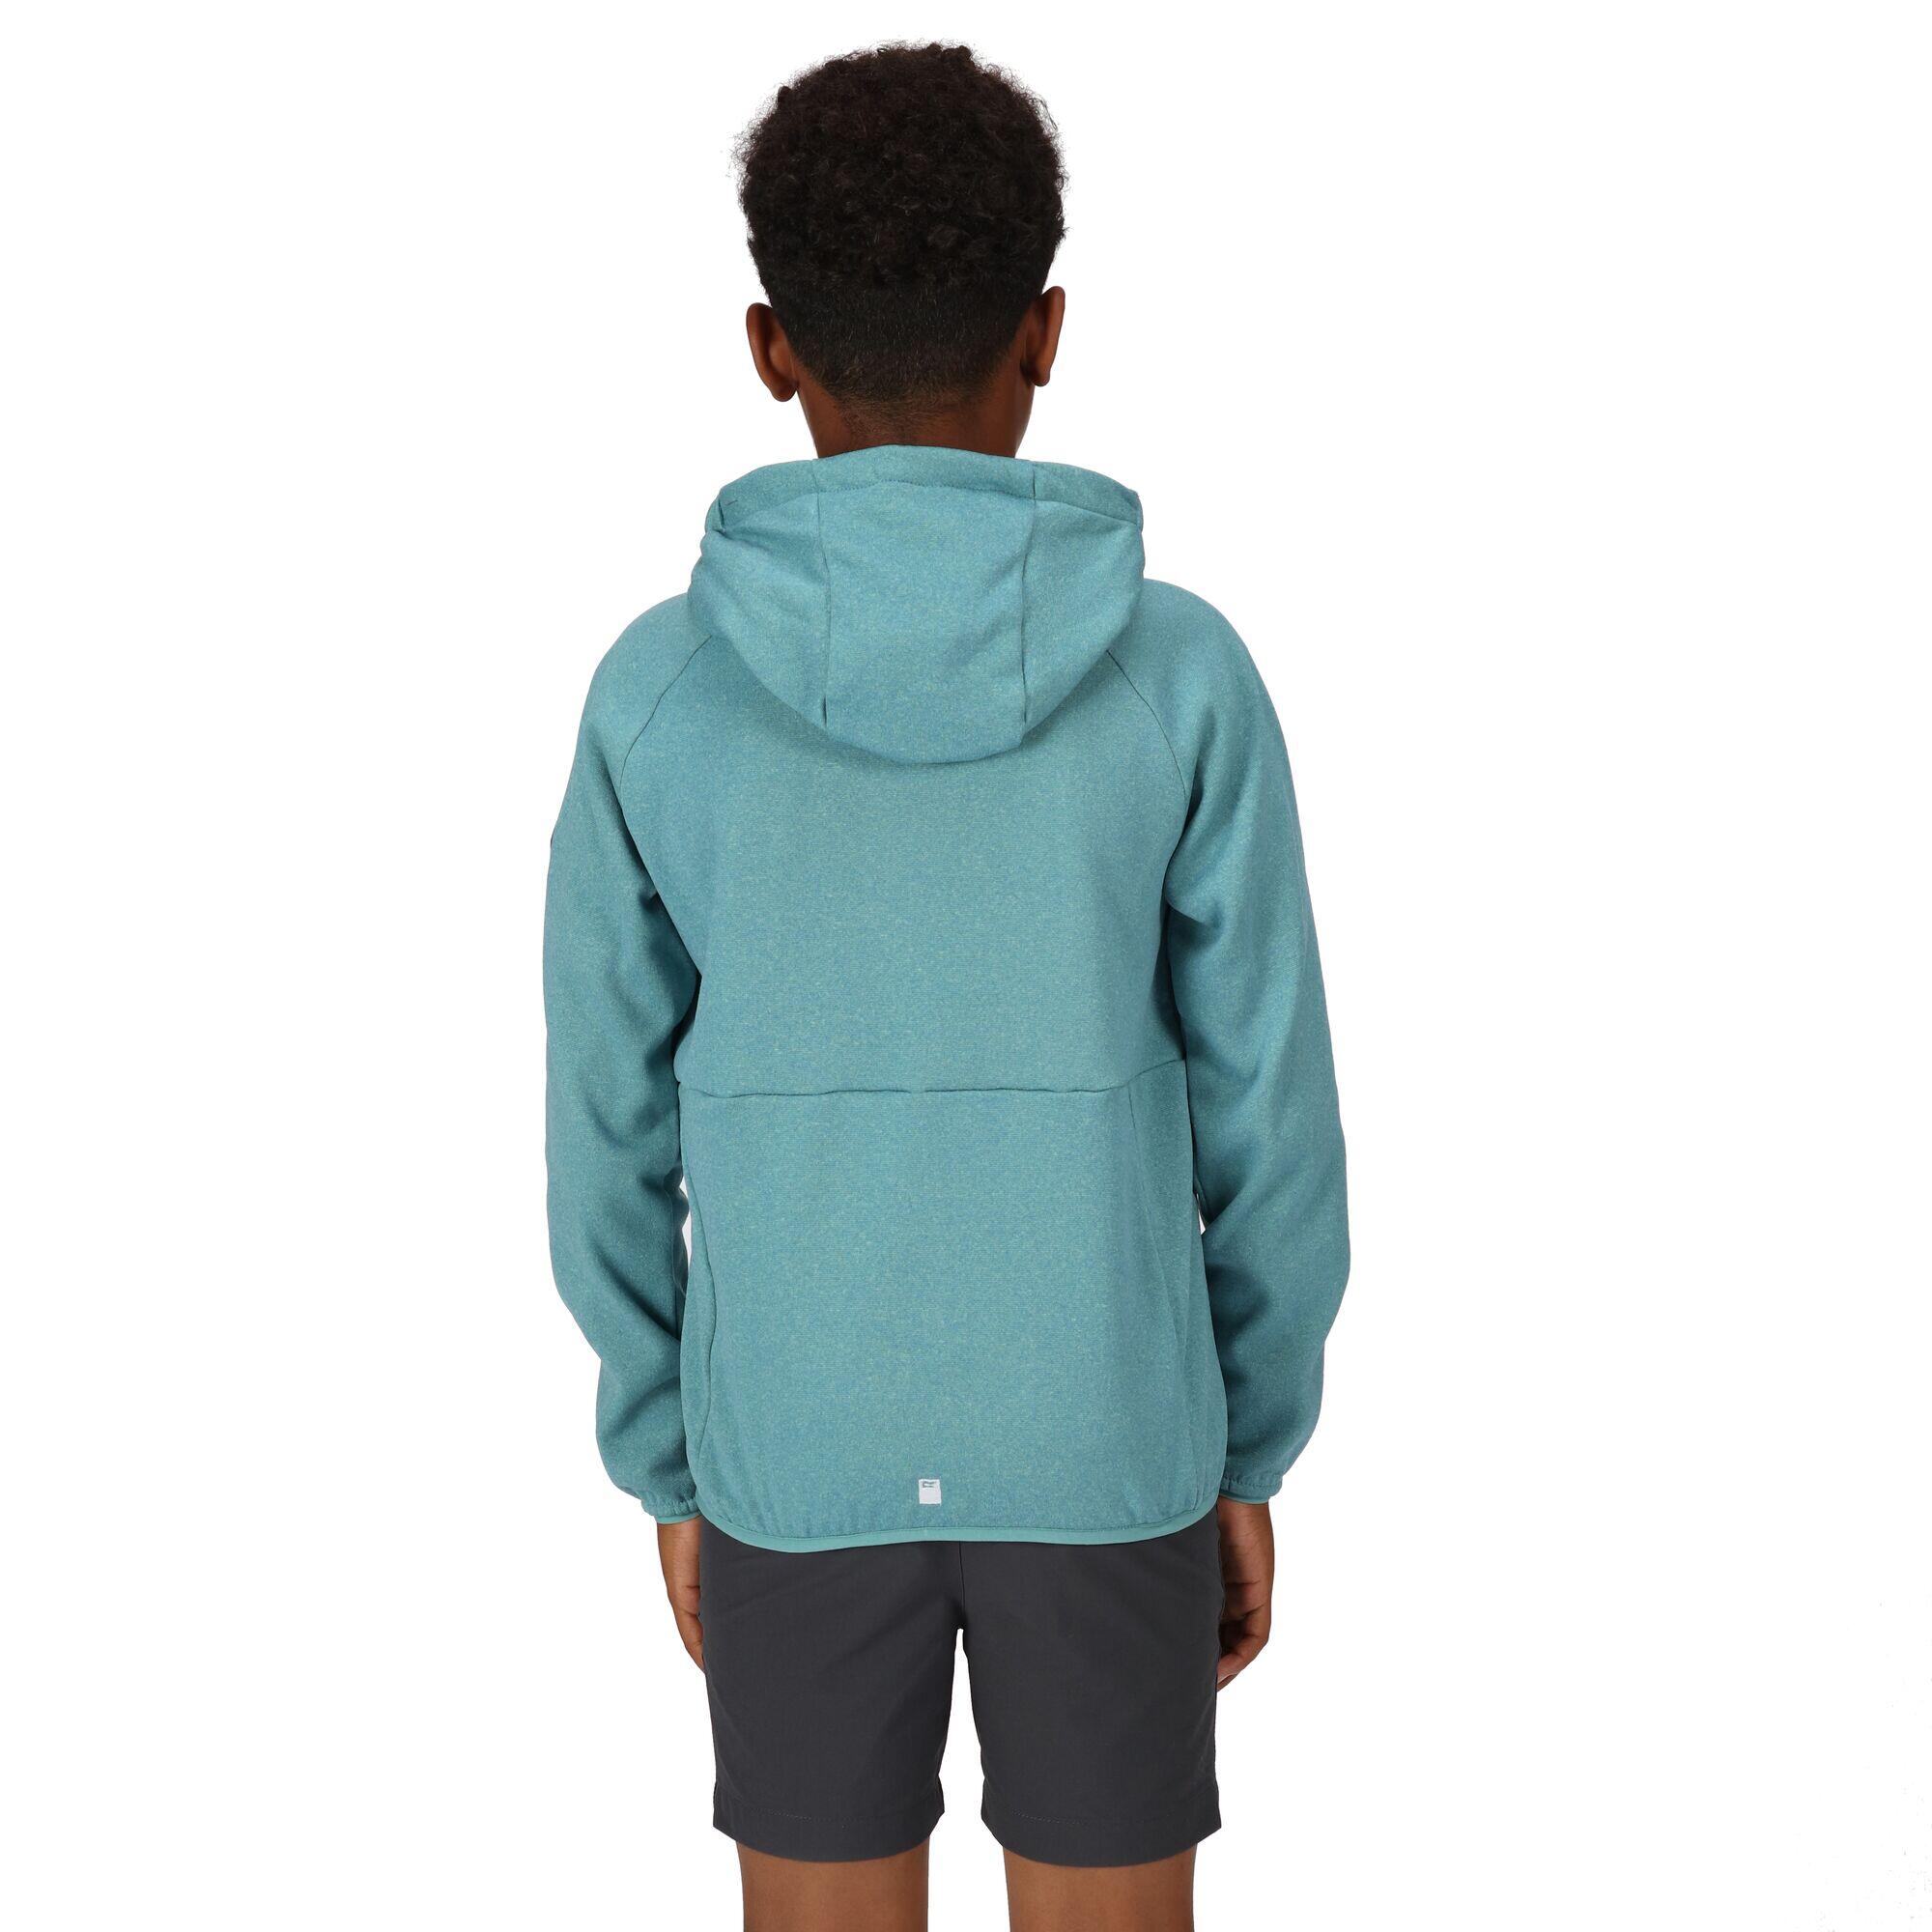 Childrens/Kids Maxwell II Lightweight Fleece Jacket (Bristol Blue) 4/5